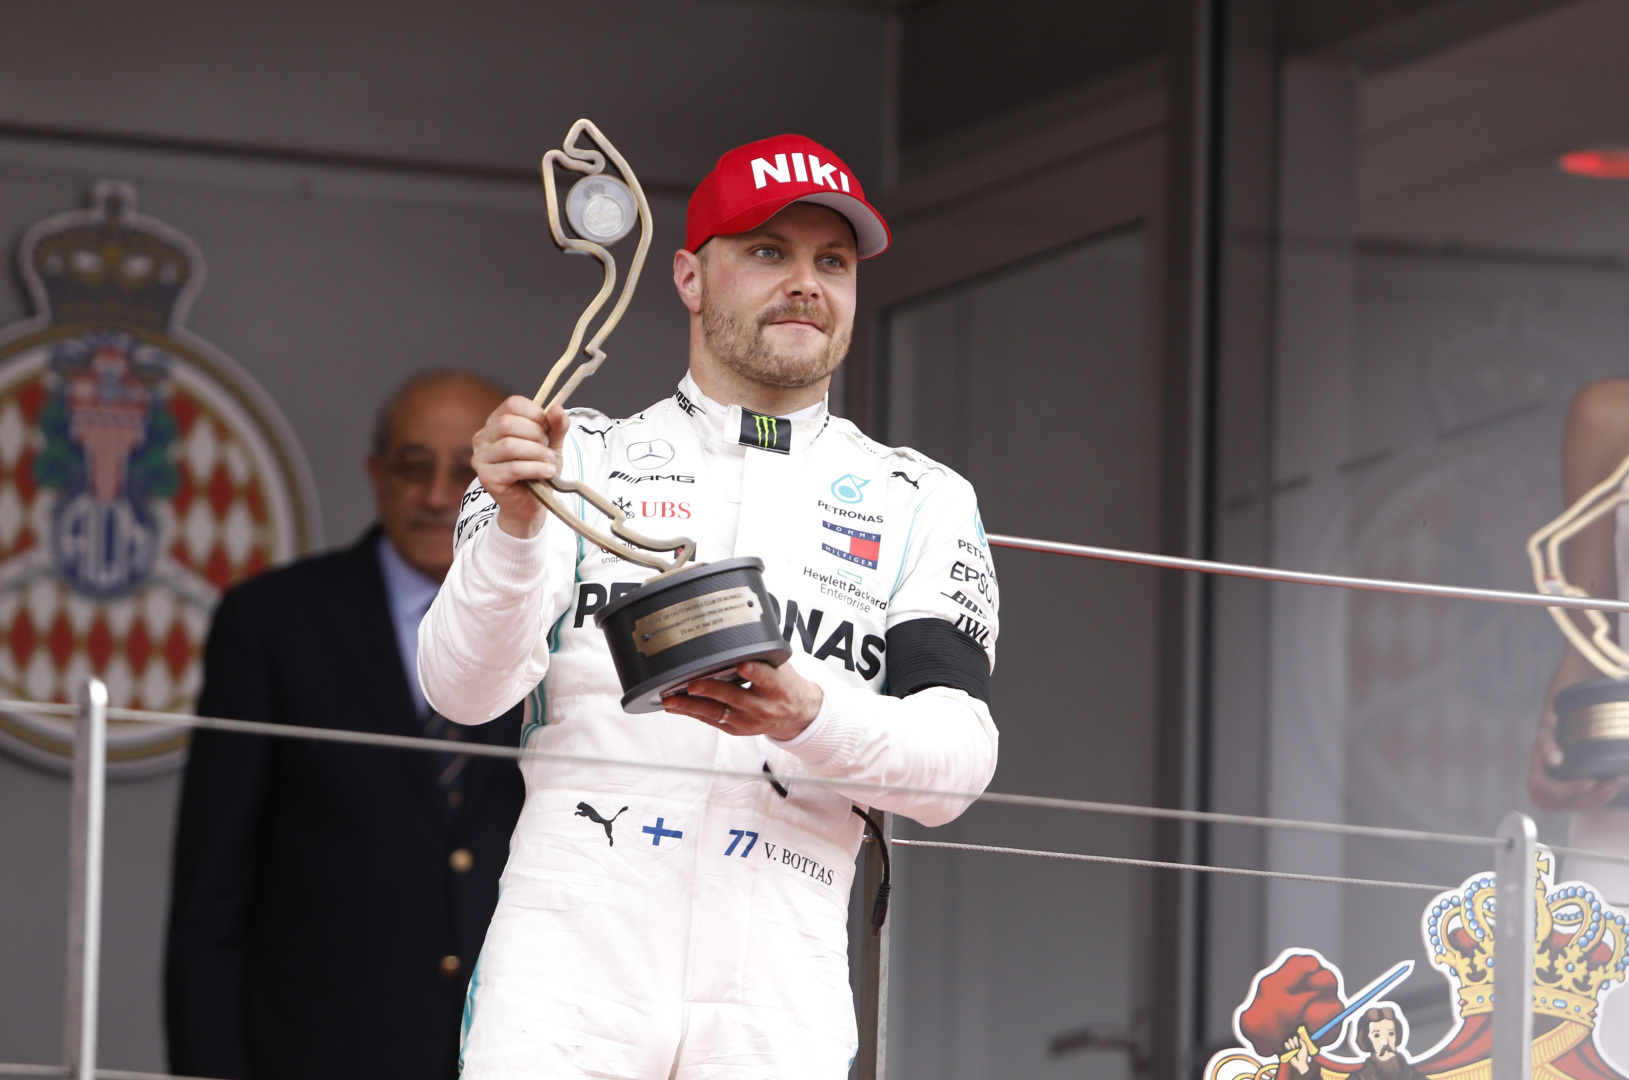 2019 Monaco Grand Prix, Sunday – Wolfgang Wilhelm